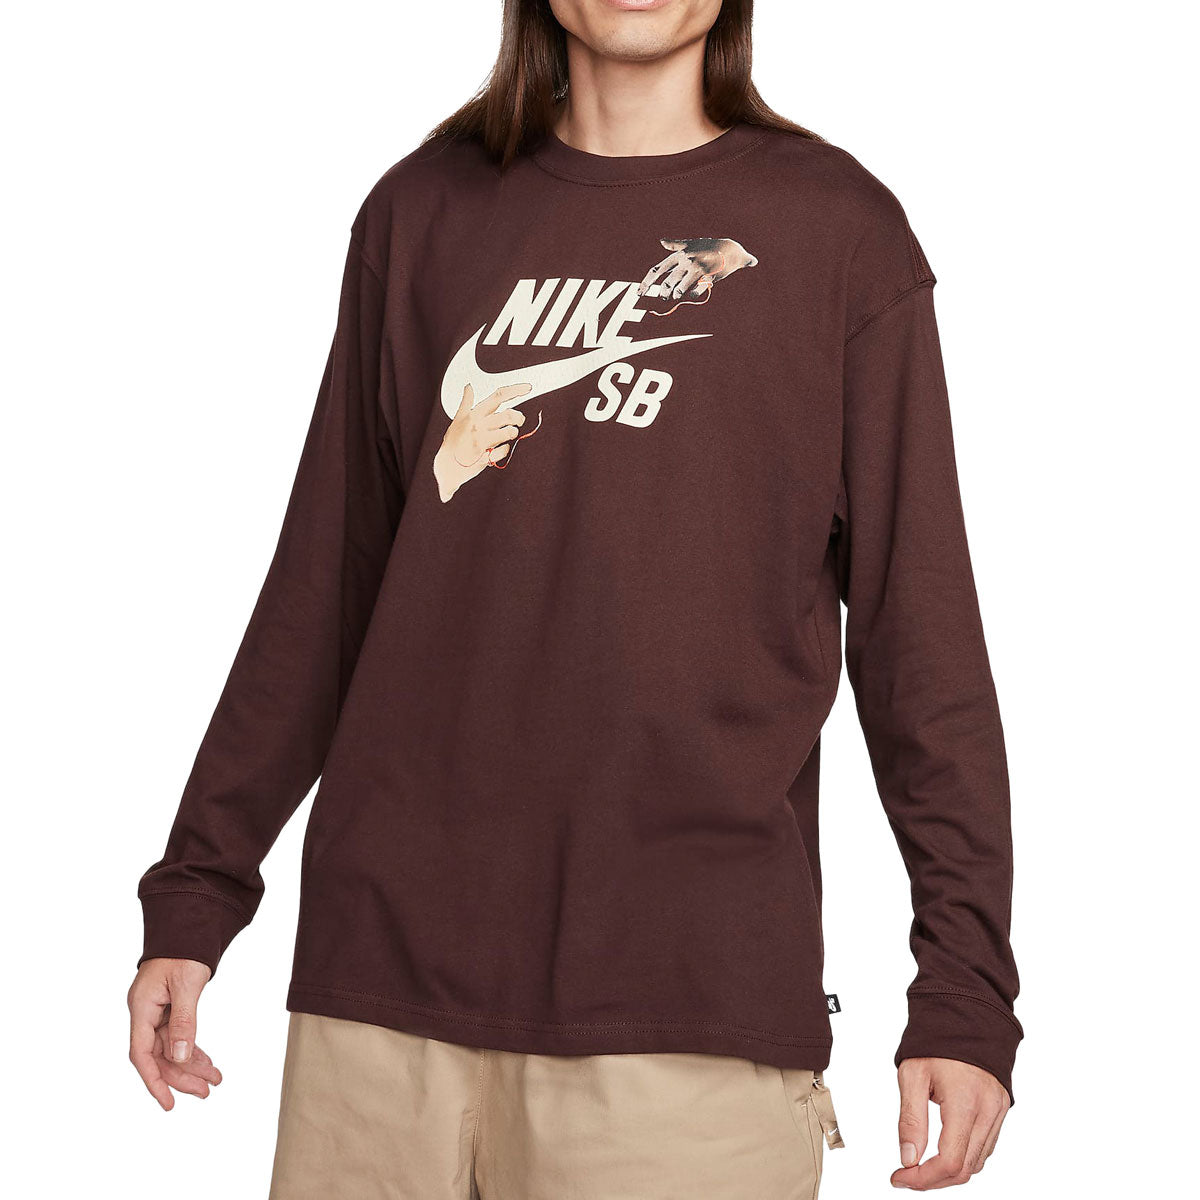 Nike SB The Reach Long Sleeve T-Shirt - Earth image 2